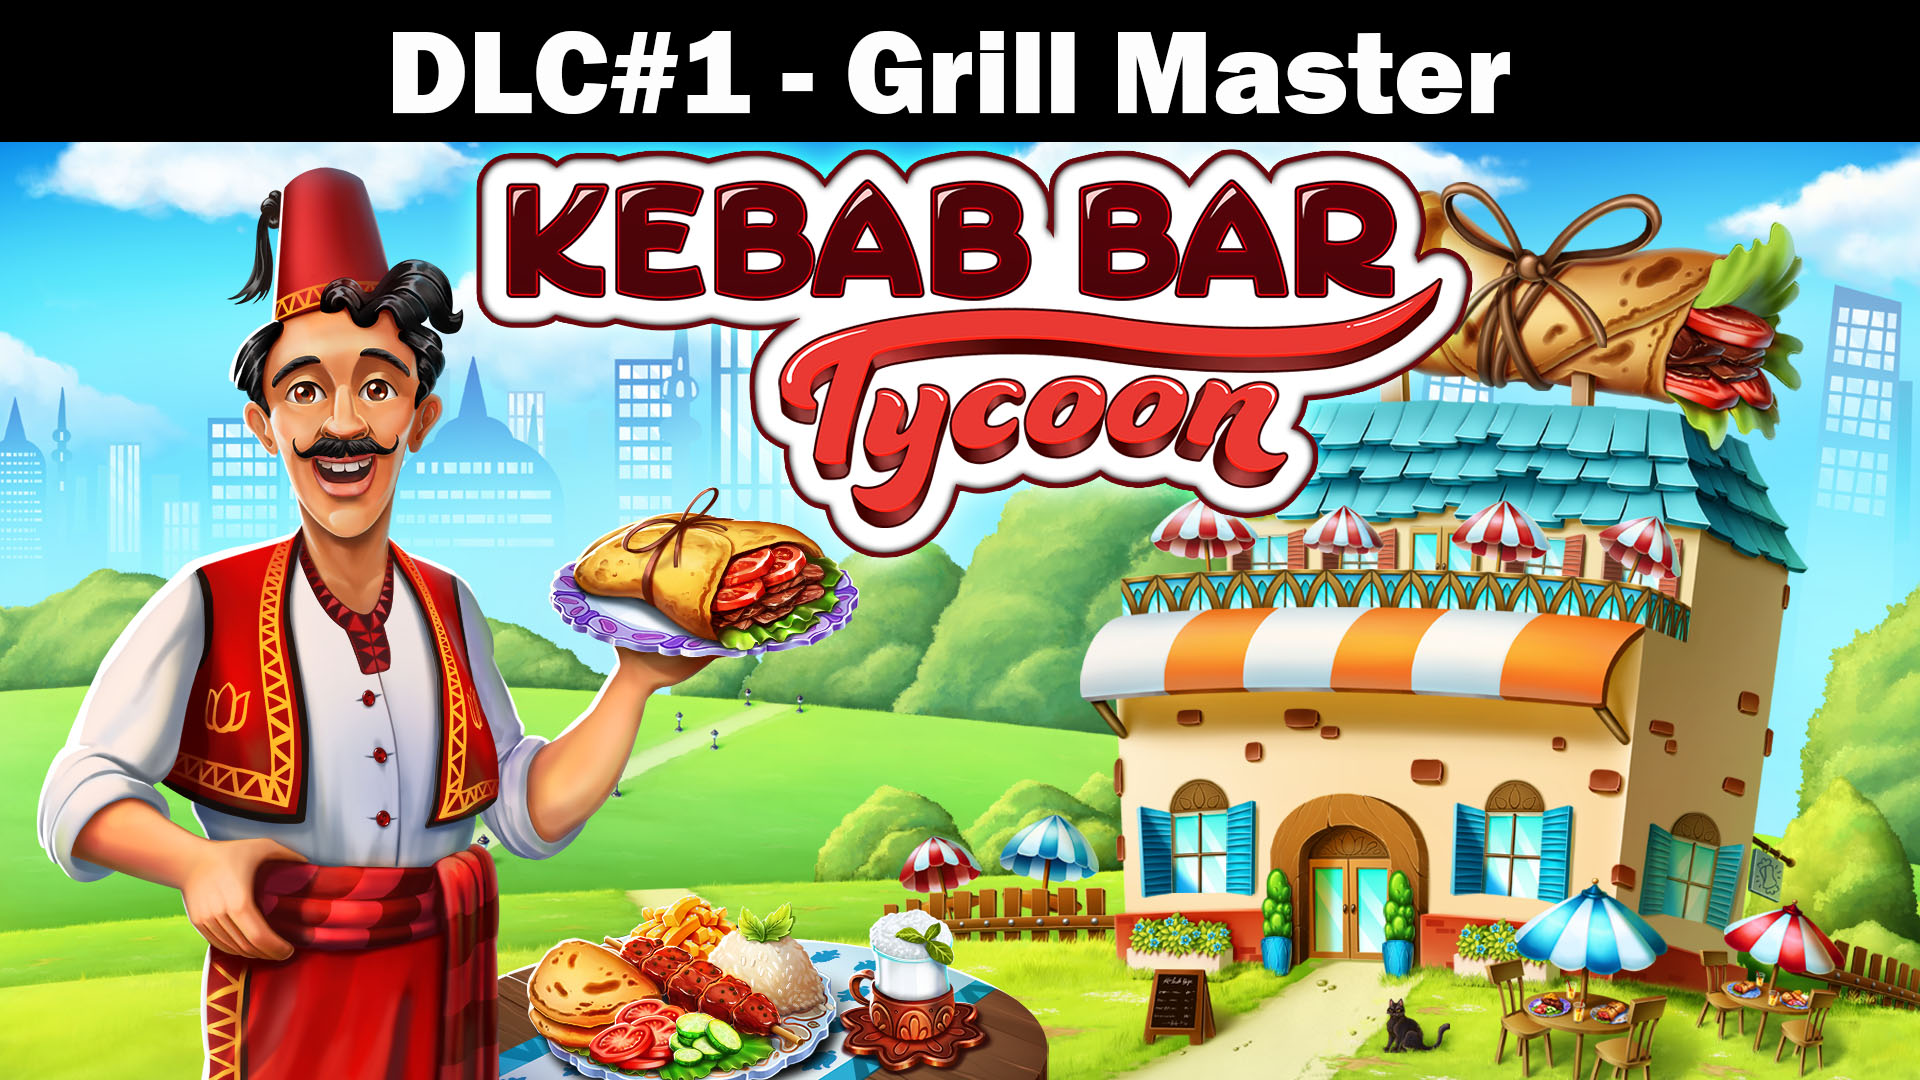 Kebab Bar Tycoon - DLC#1 - Grill Master